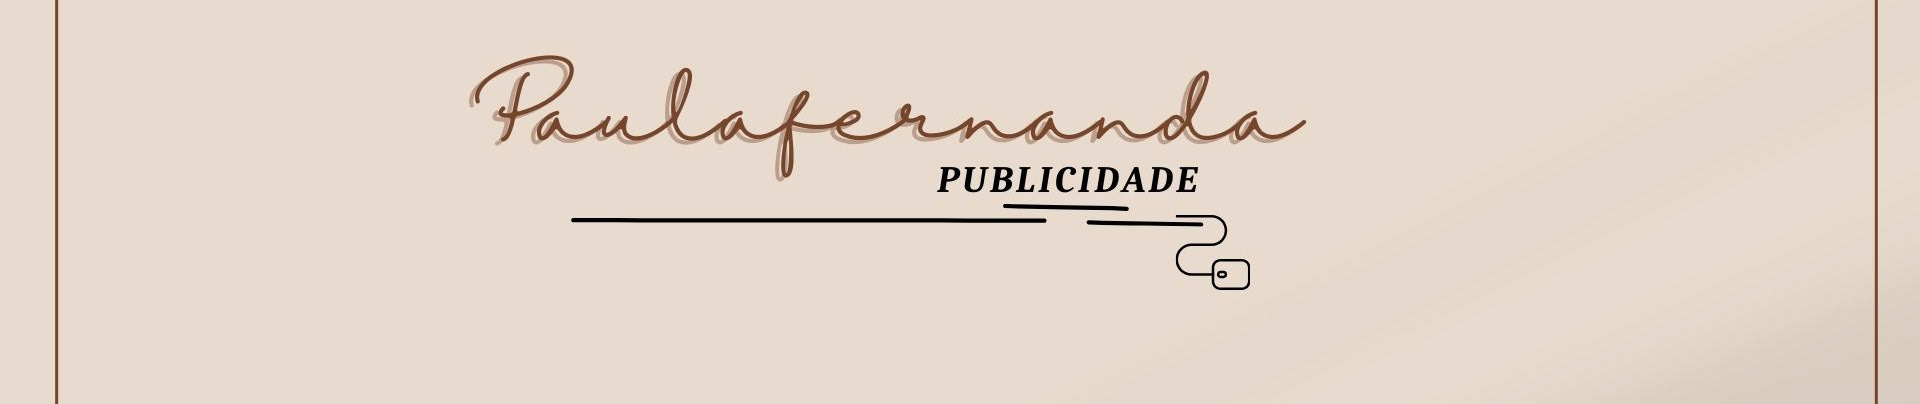 PAULA FERNANDA ROCHA's profile banner